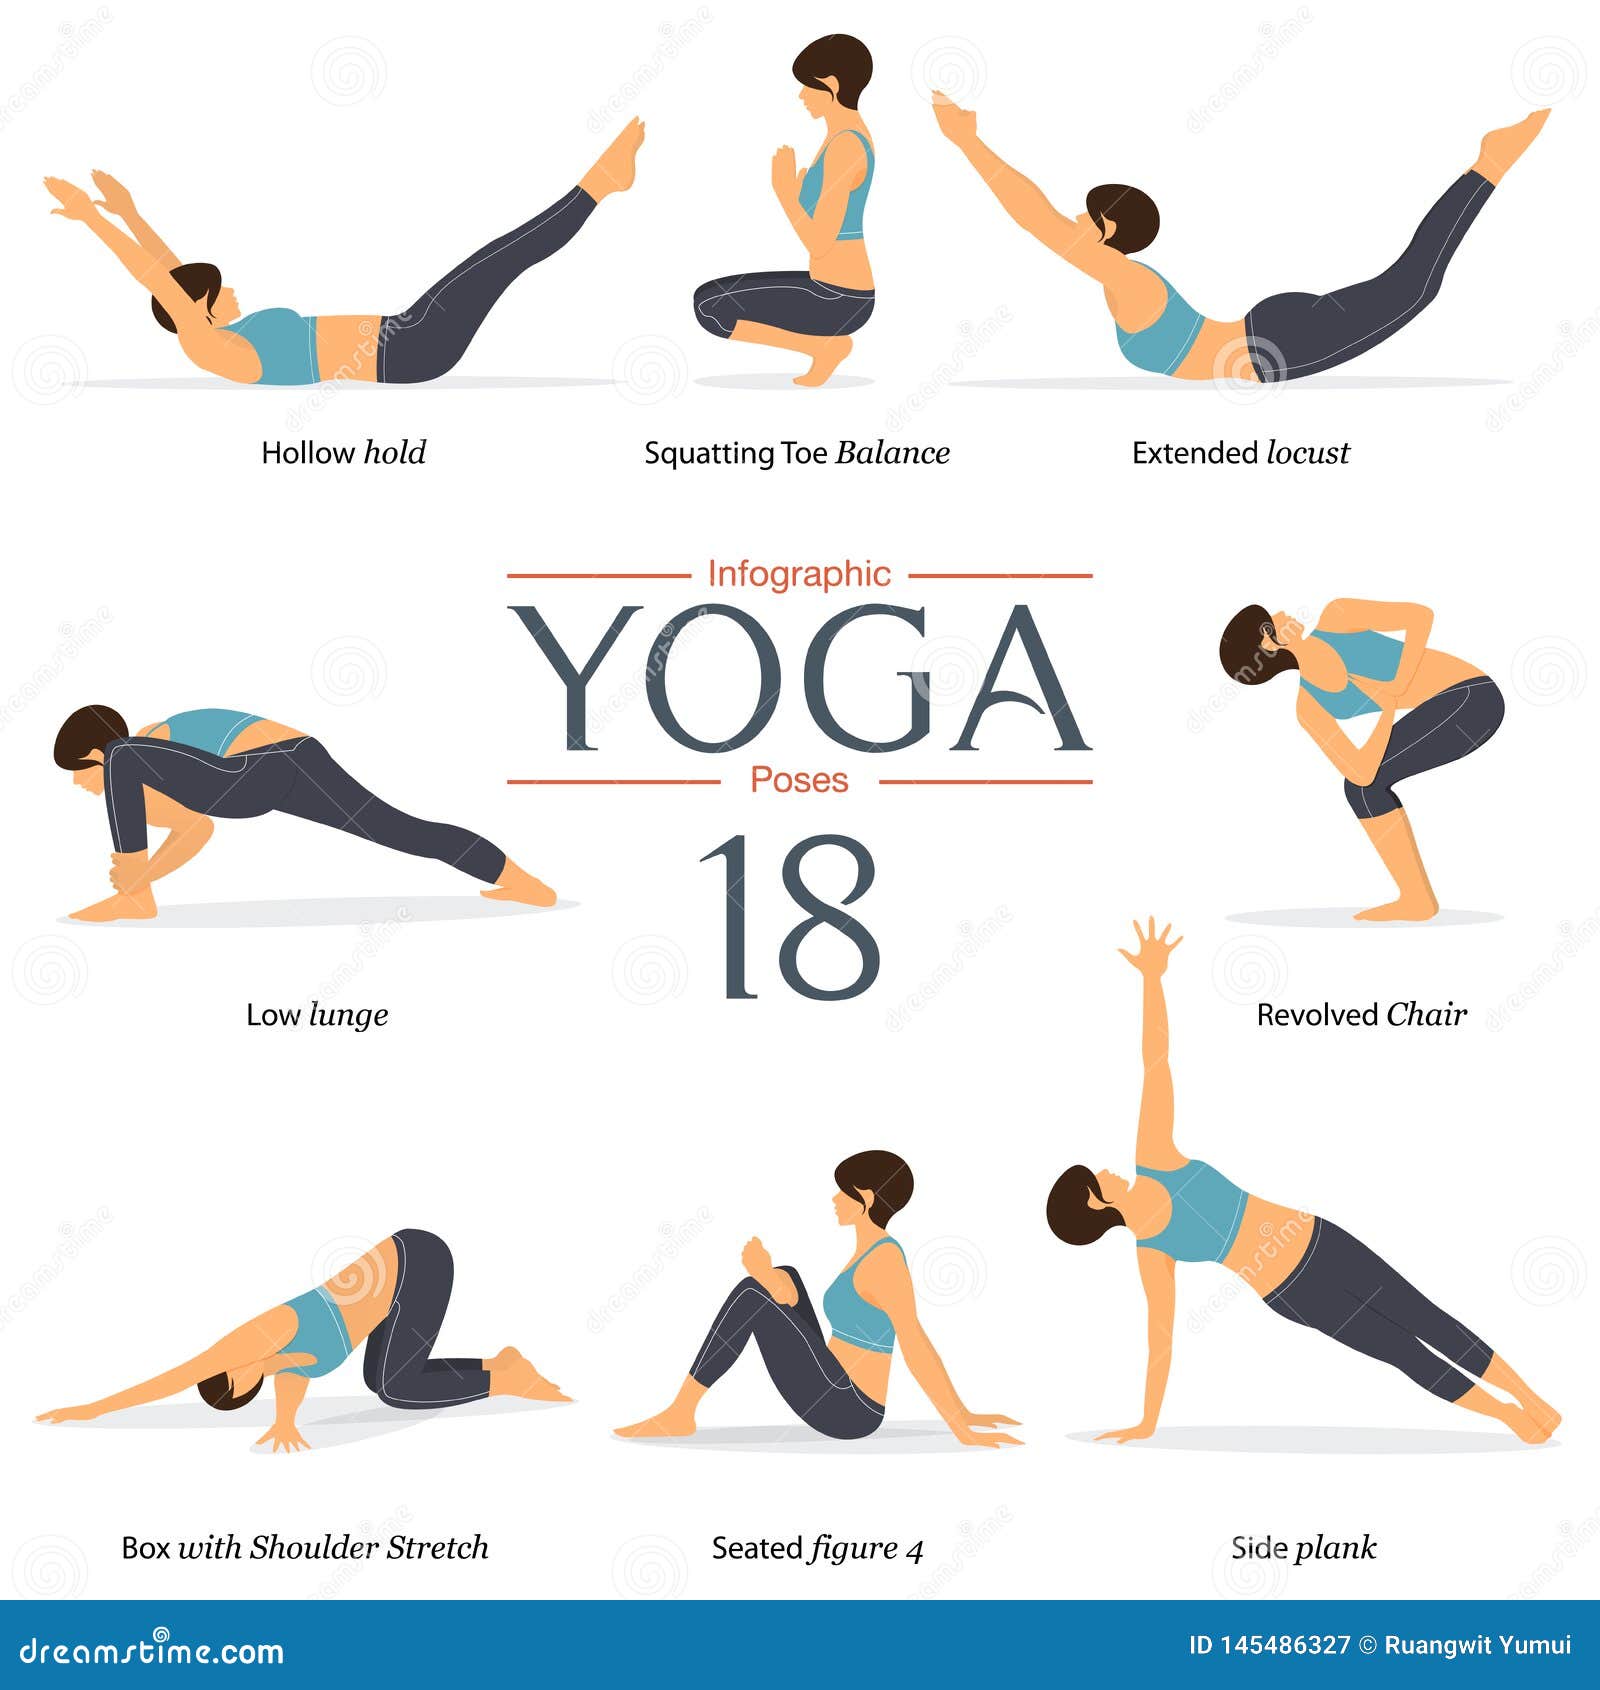 8 Easy Yoga Asanas For A Morning Workout Routine | So Delhi